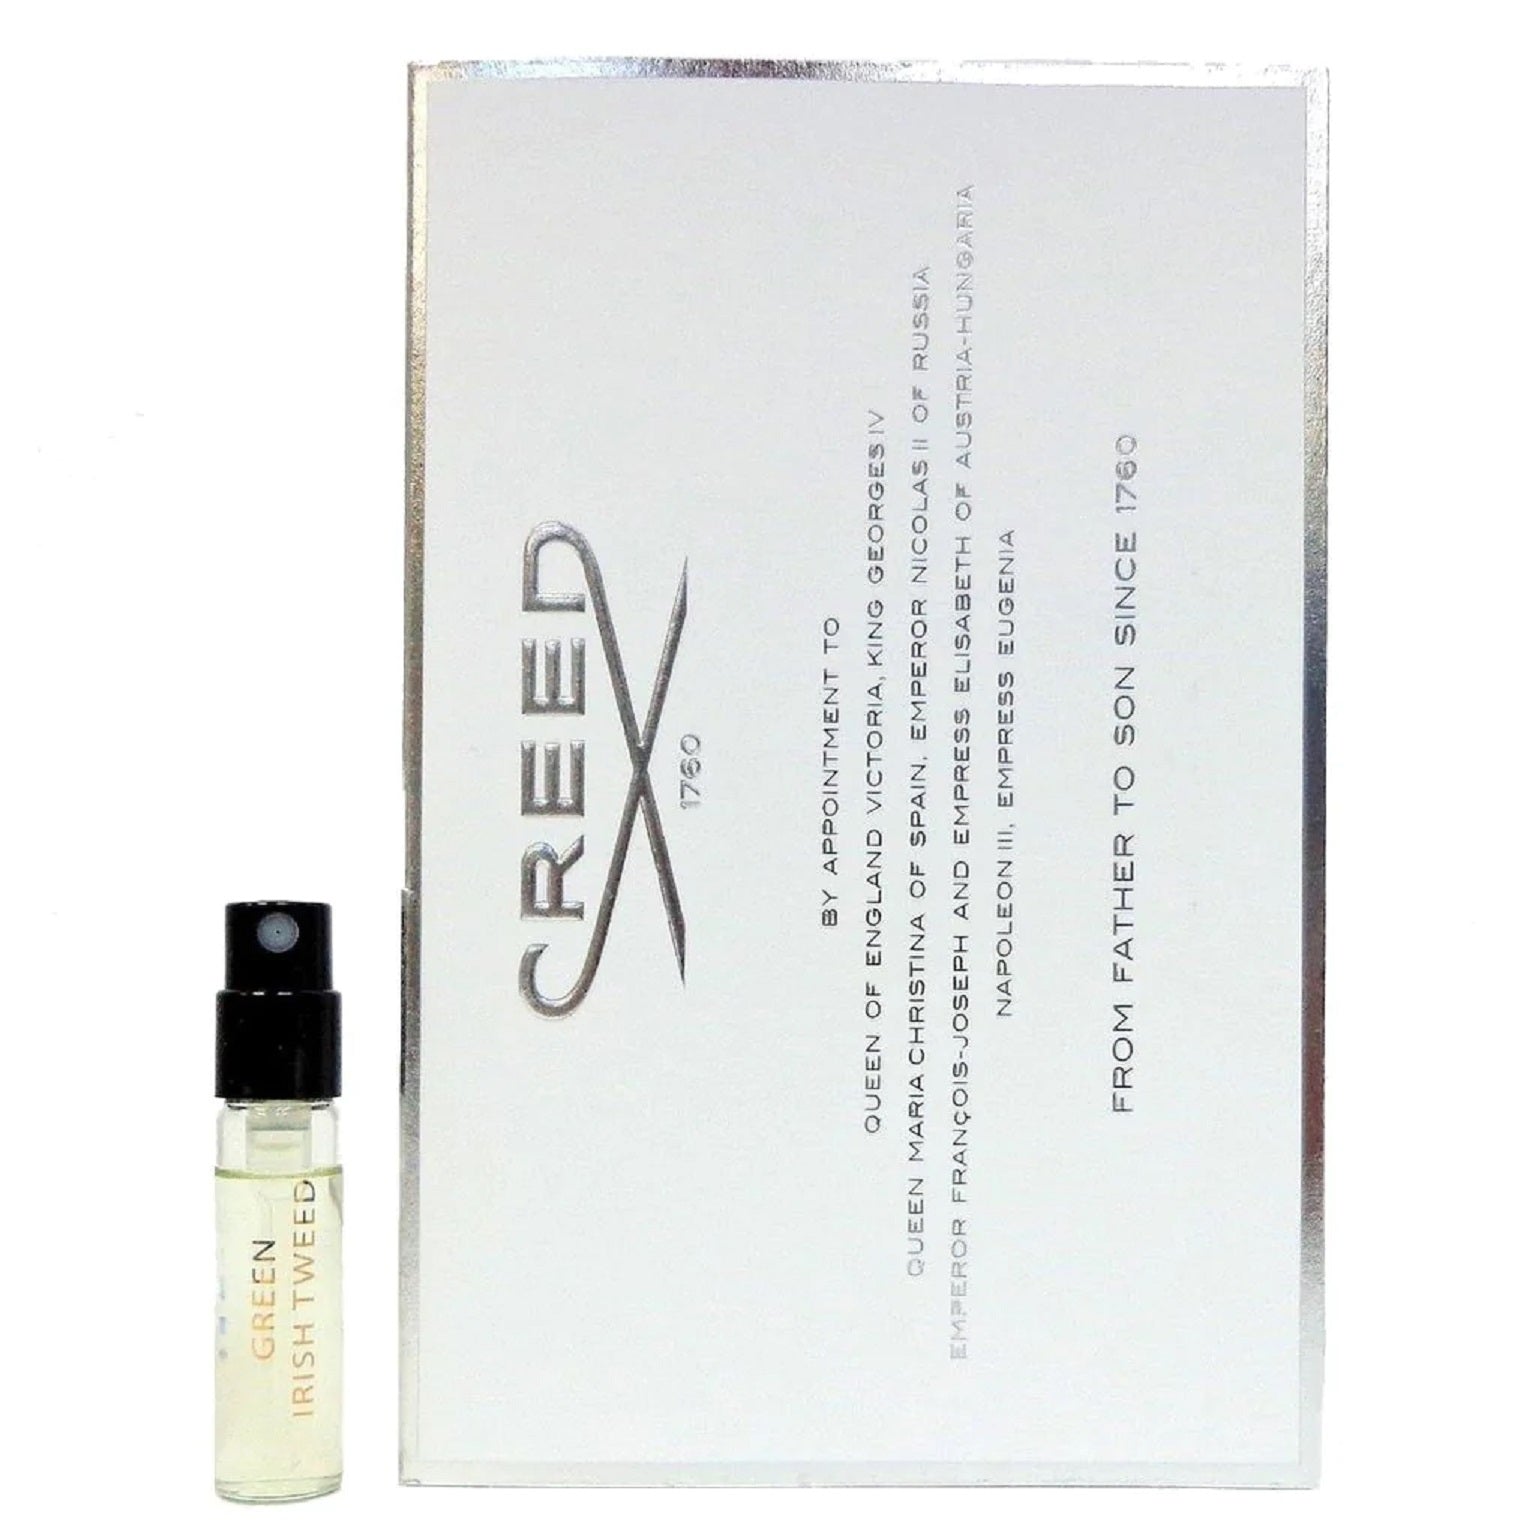 Creed Uradni vzorec parfuma Green Irish Tweed edp 2.5 ml